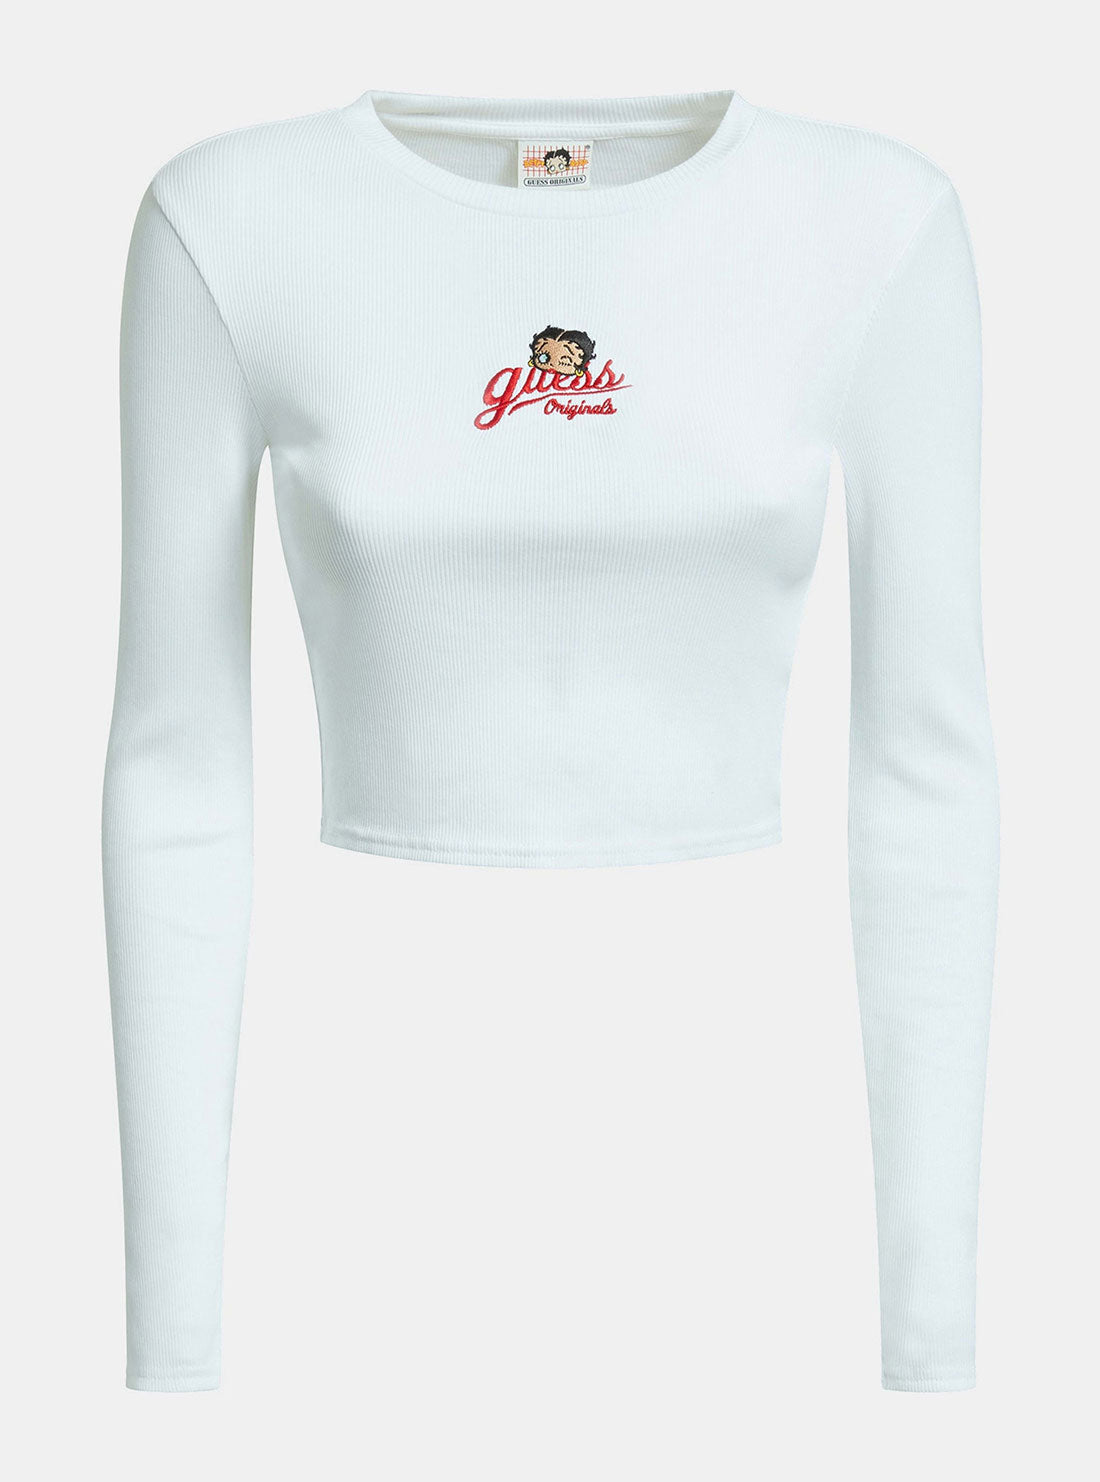 GUESS Women's Guess Originals x Betty Boop White Ribbed T-Shirt W2BP10RAPC3 Ghost View